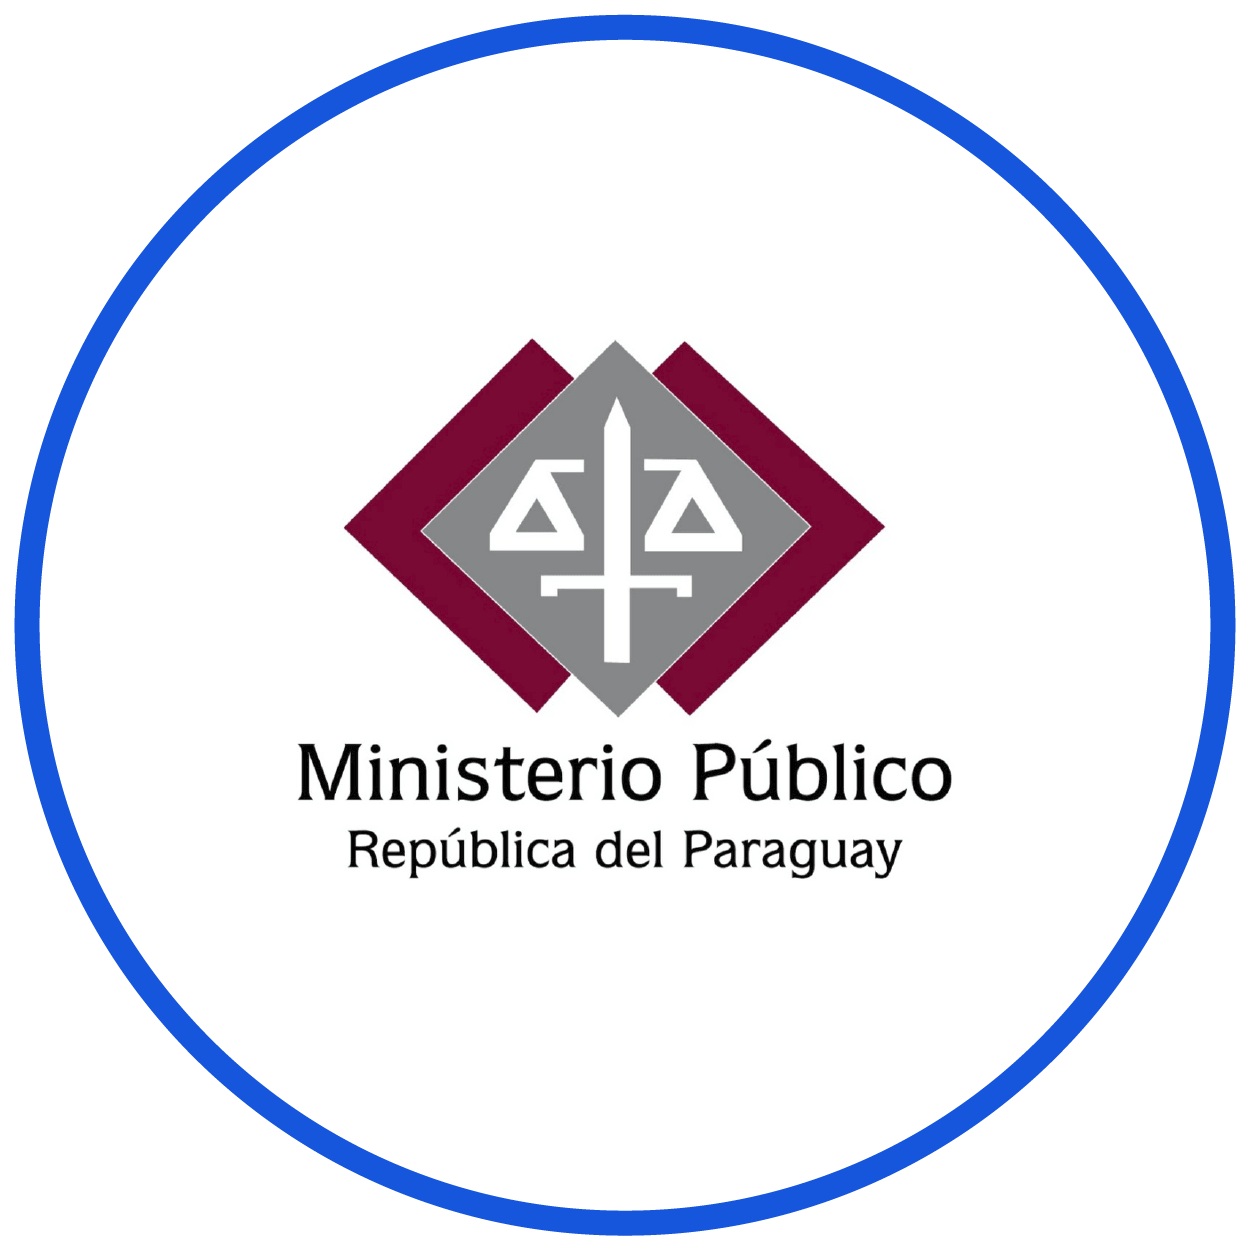 LPN - Licitación Pública Nacional